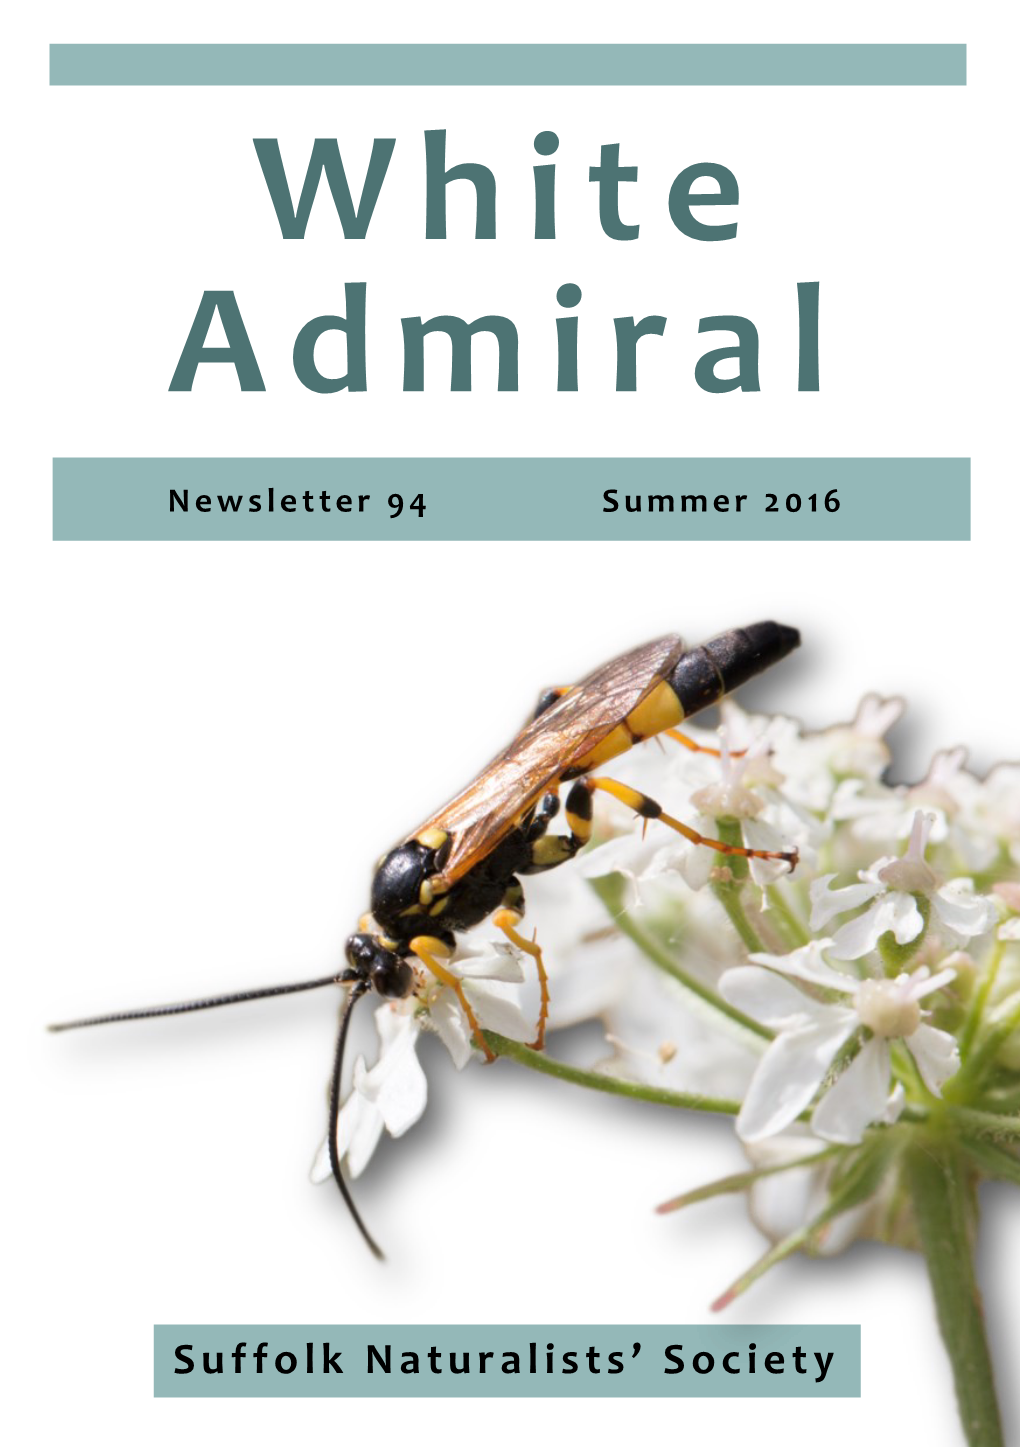 White Admiral Newsletter